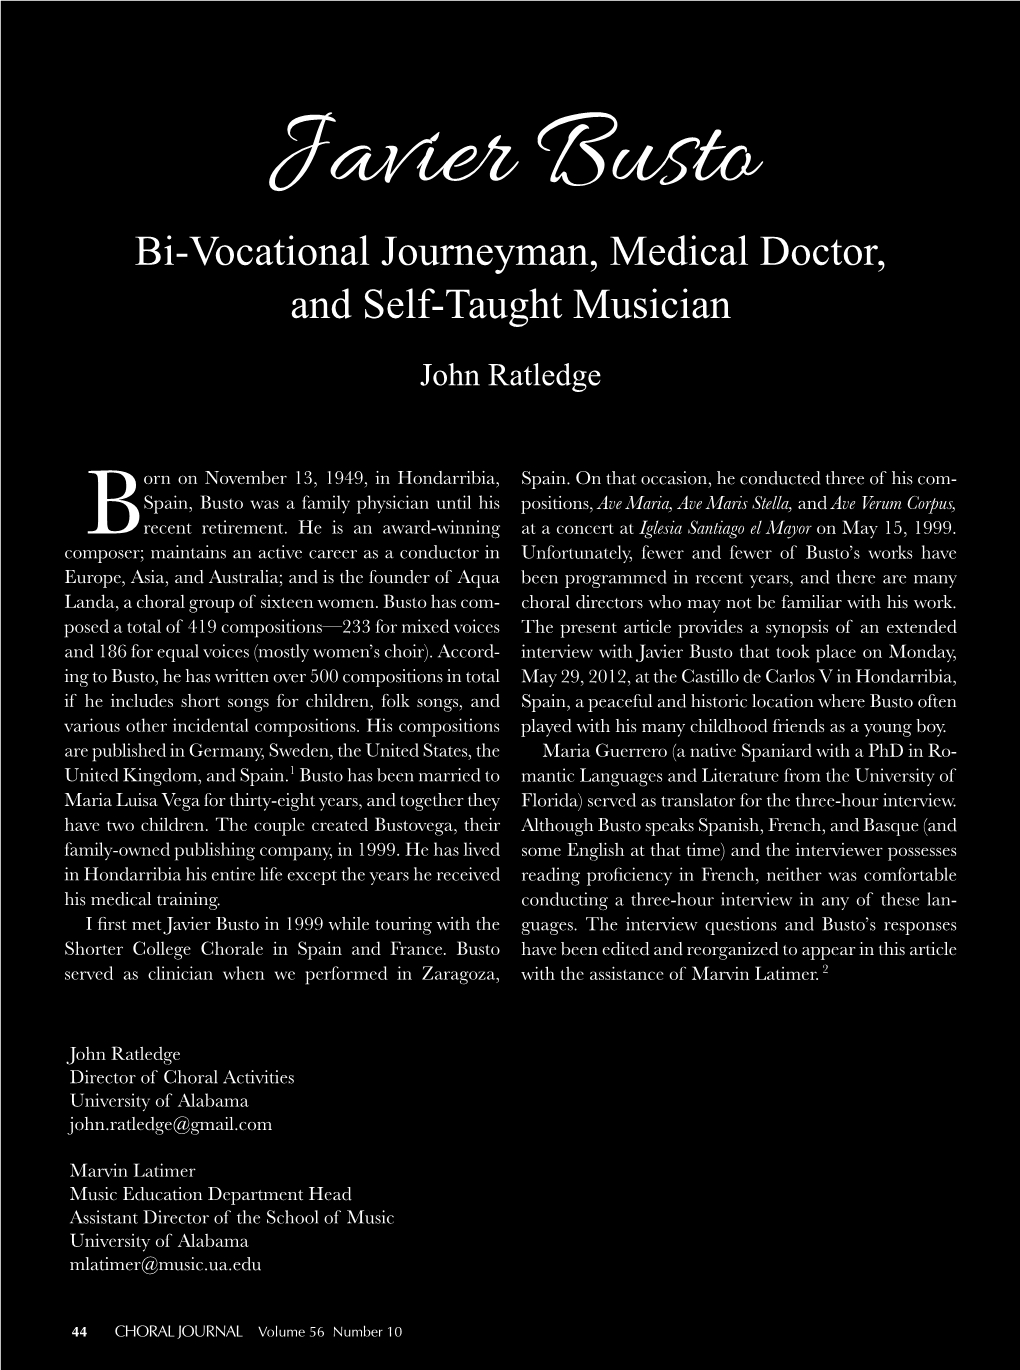 Javier Busto Bi-Vocational Journeyman, Medical Doctor, and Self-Taught Musician